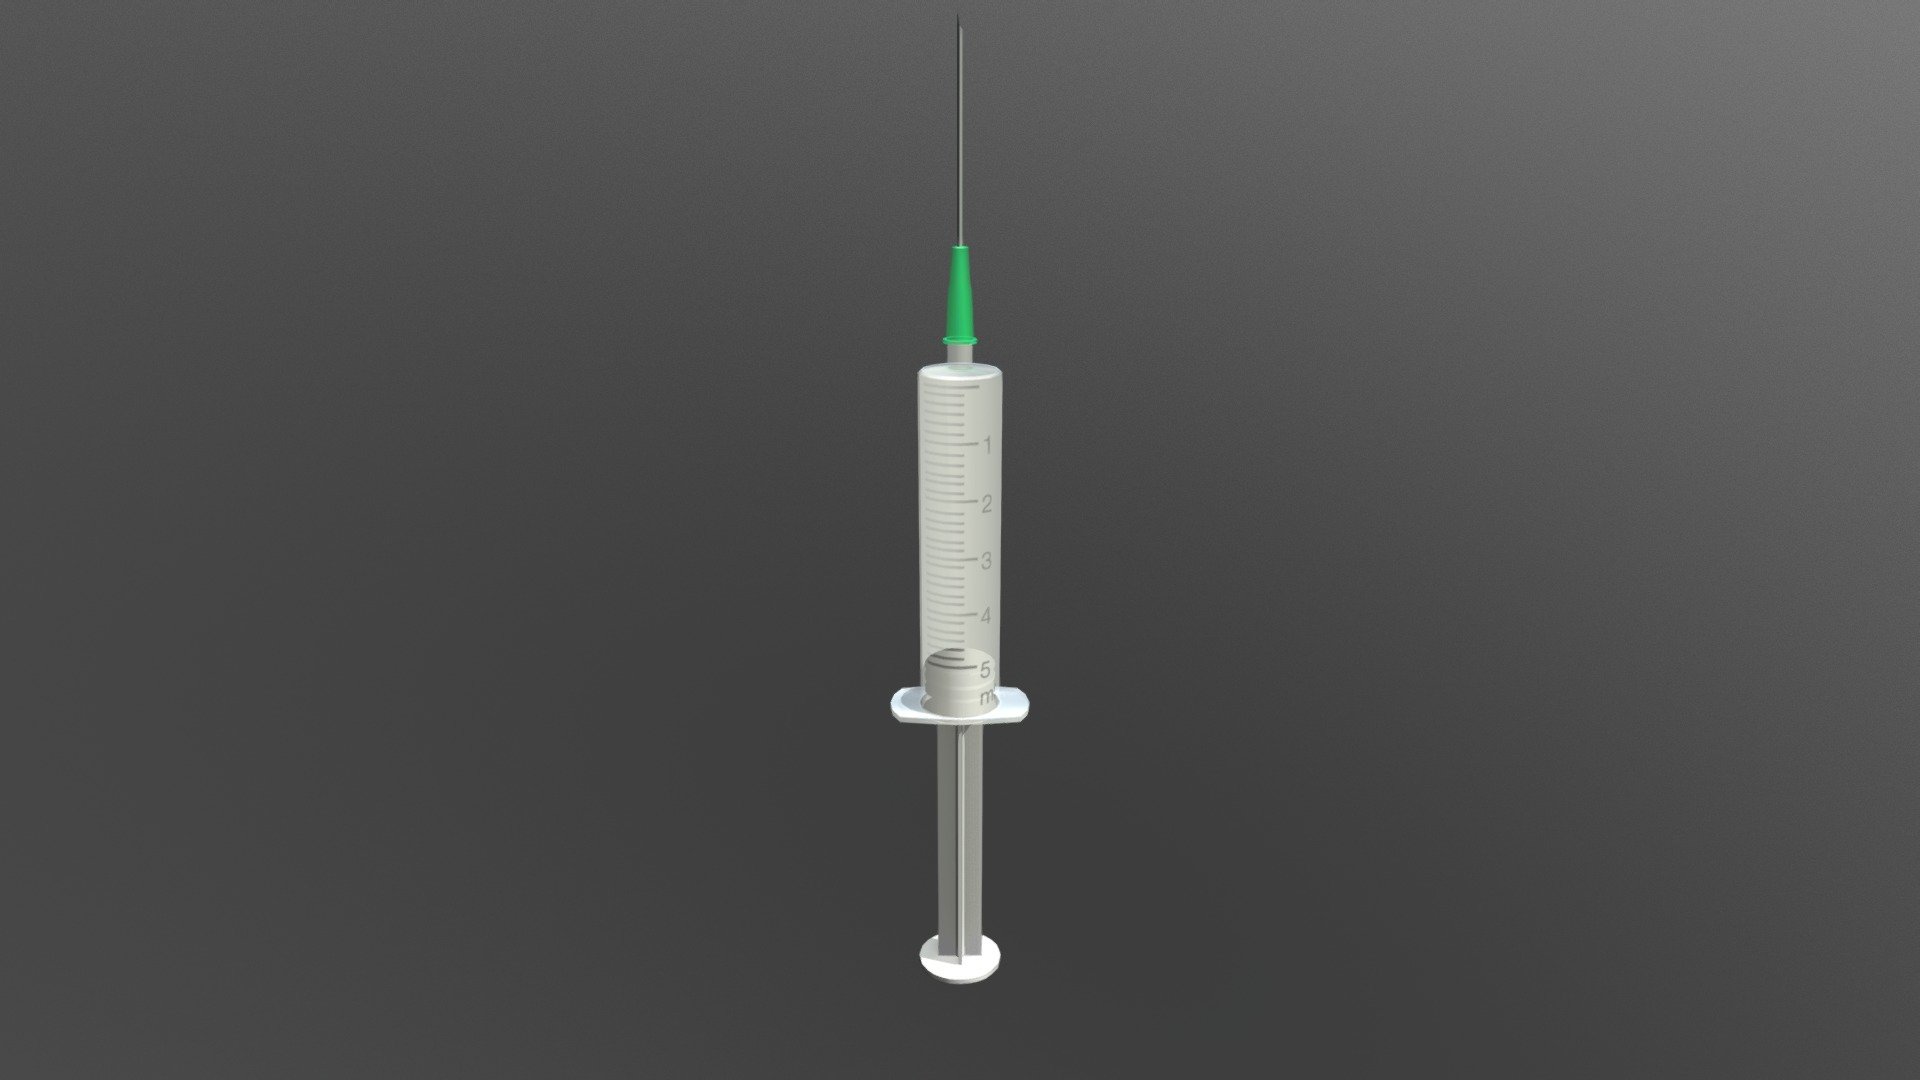 Syringe lowpoly - 3D model by alexnoiseless 3d model